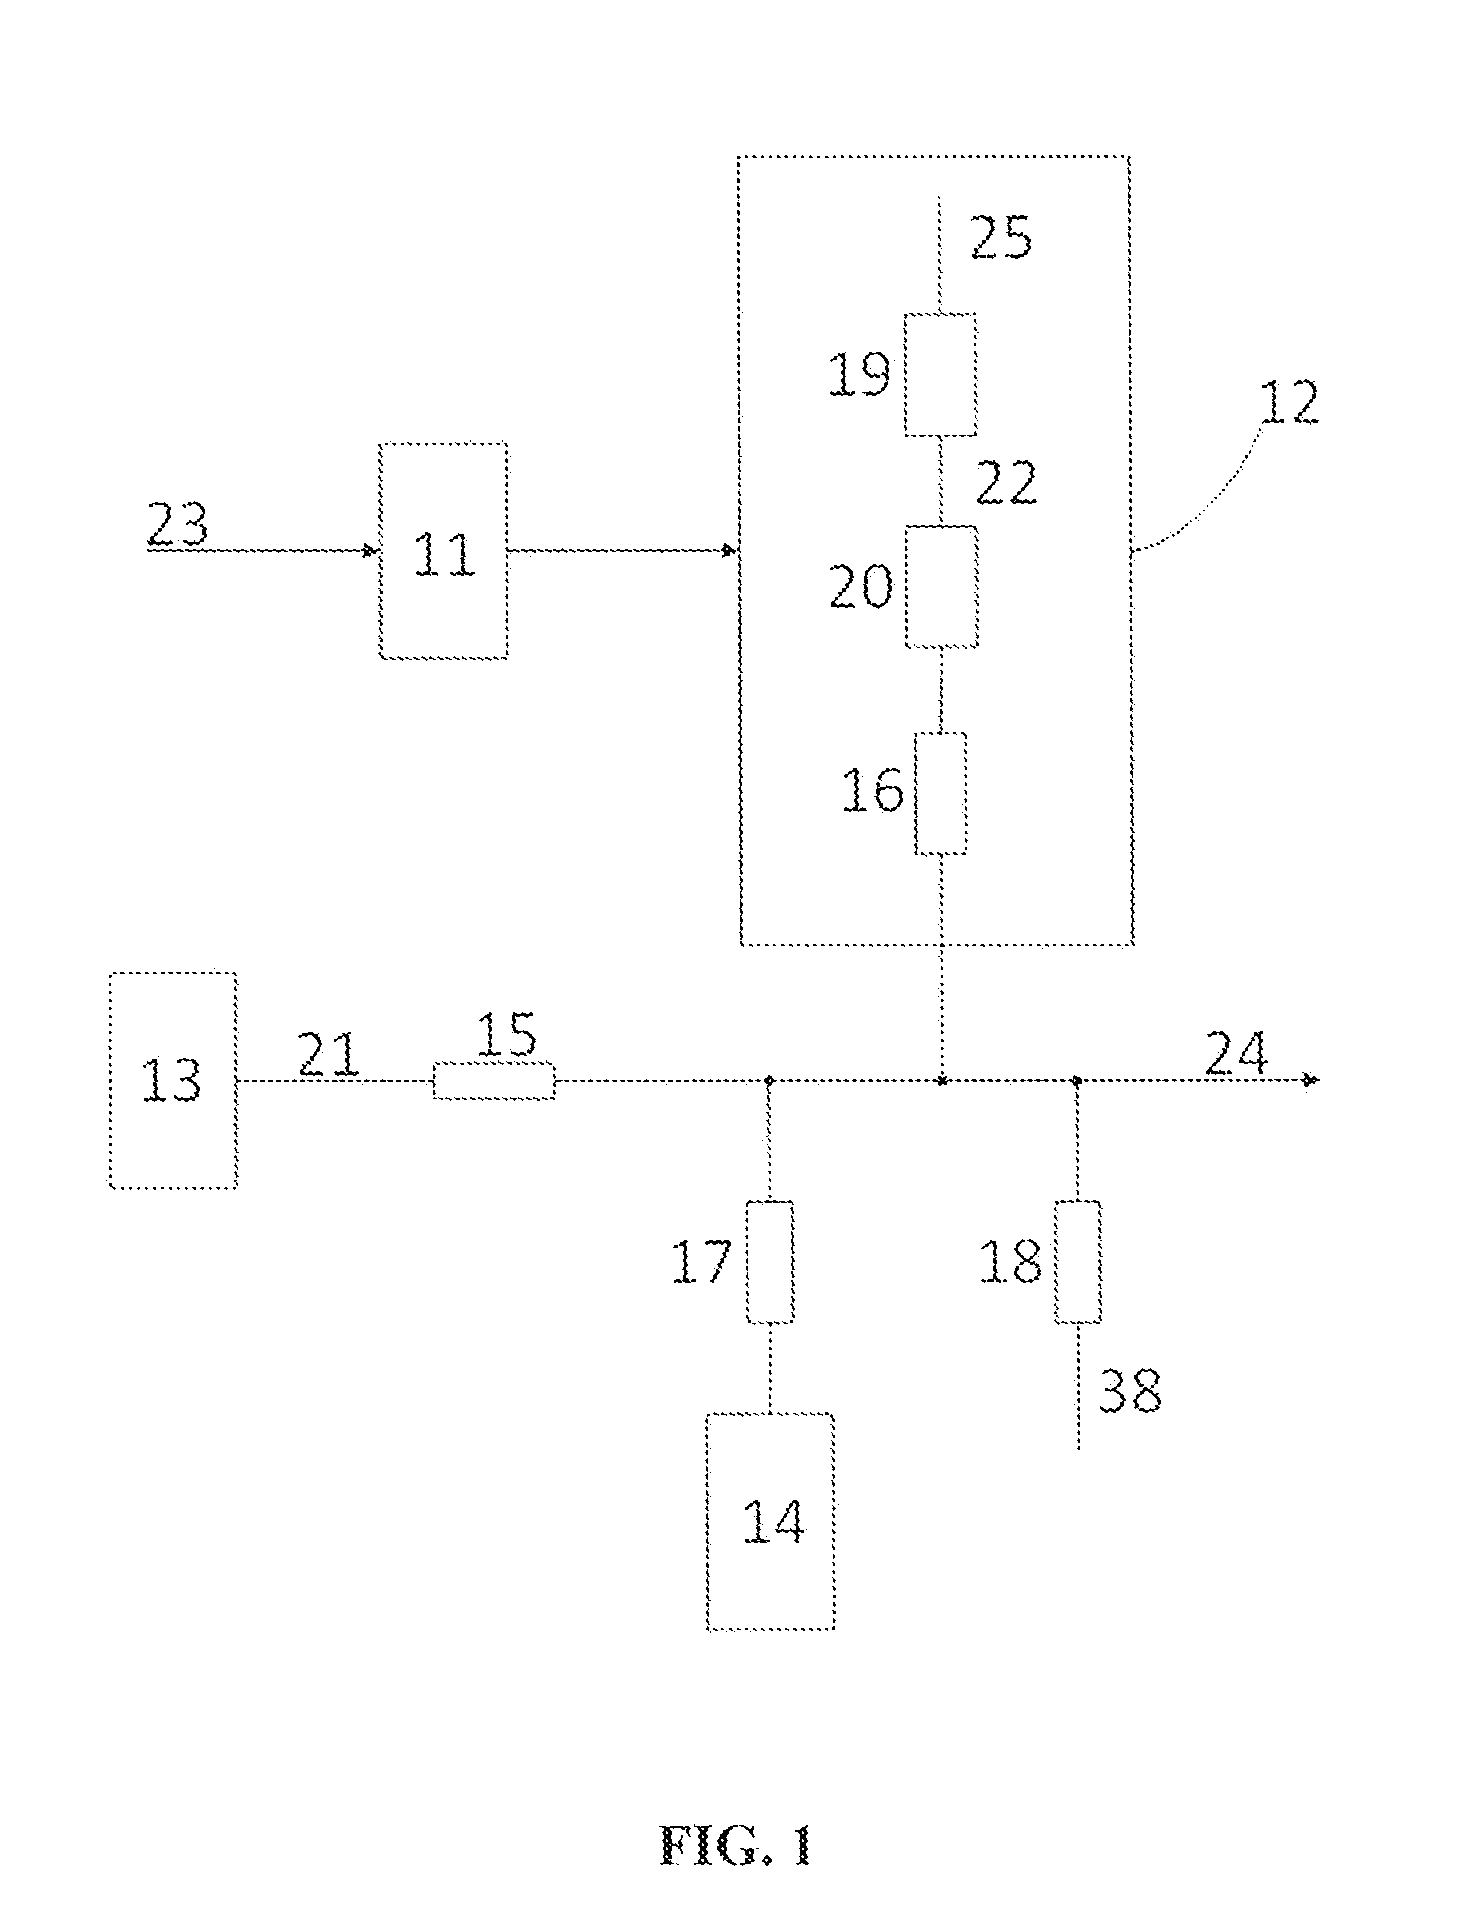 Voltage regulator with multiple output ranges